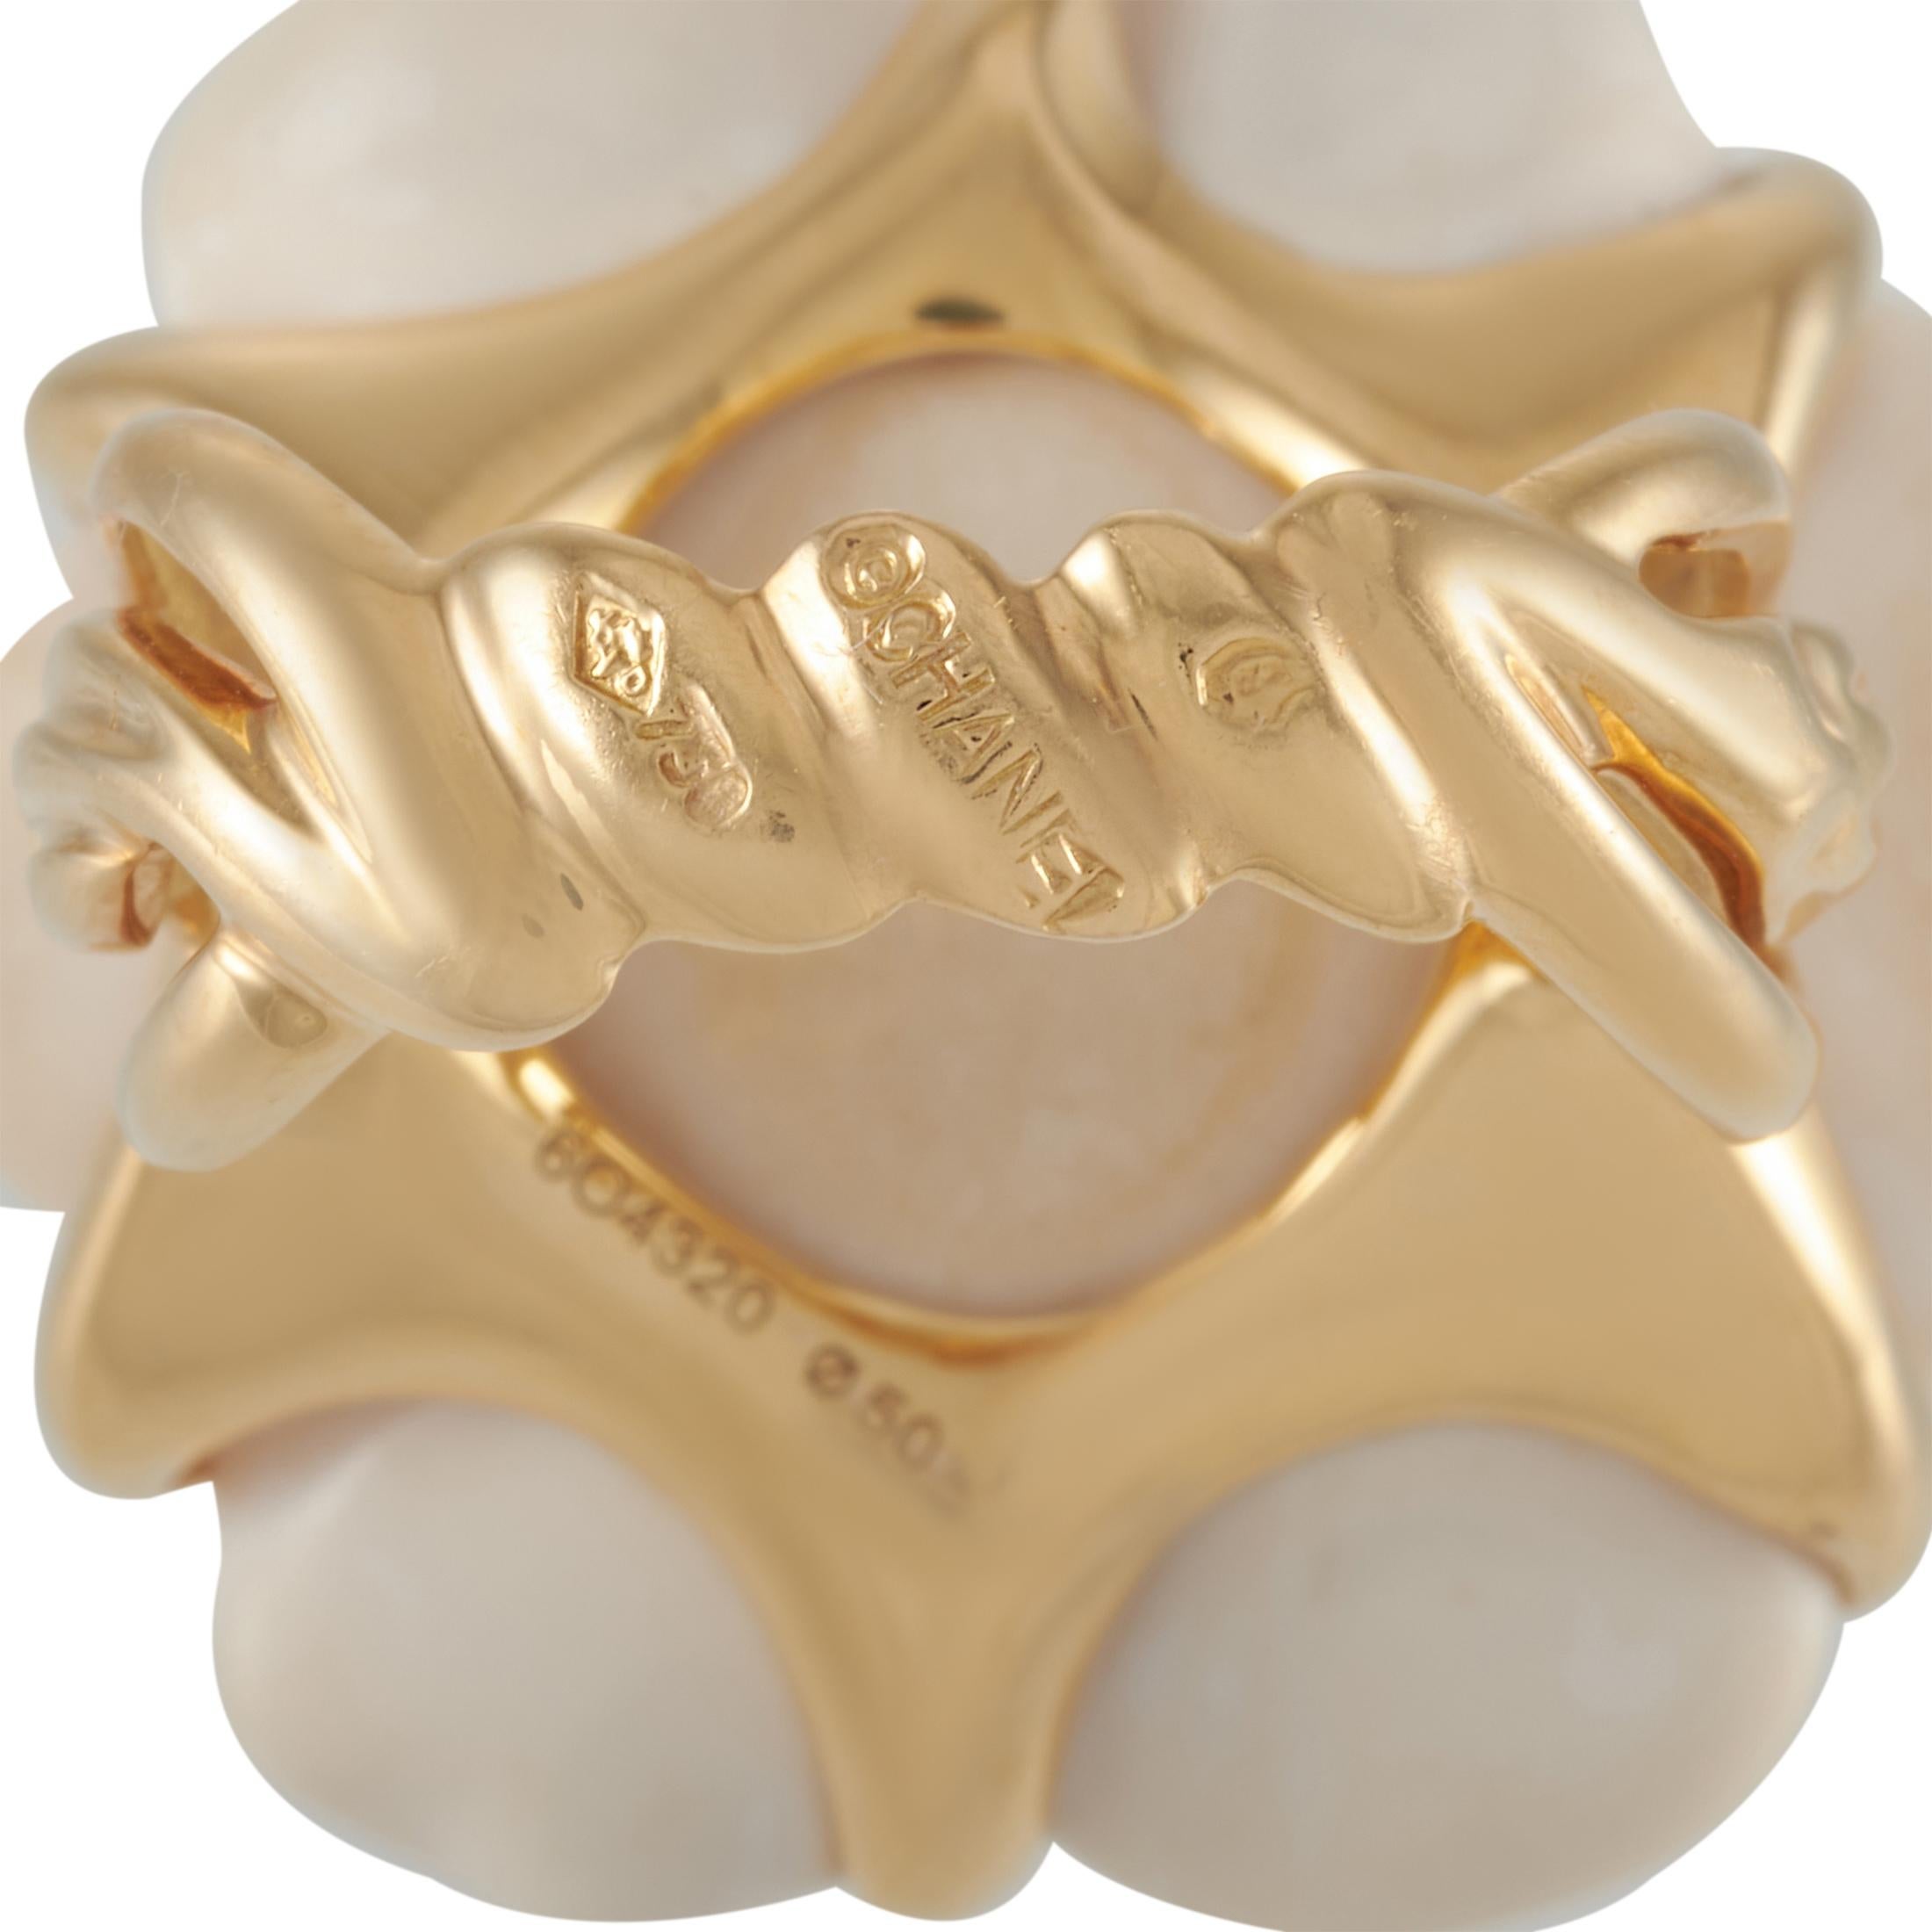 Women's Chanel Camélia 18 Karat Yellow Gold and Ceramic Ring